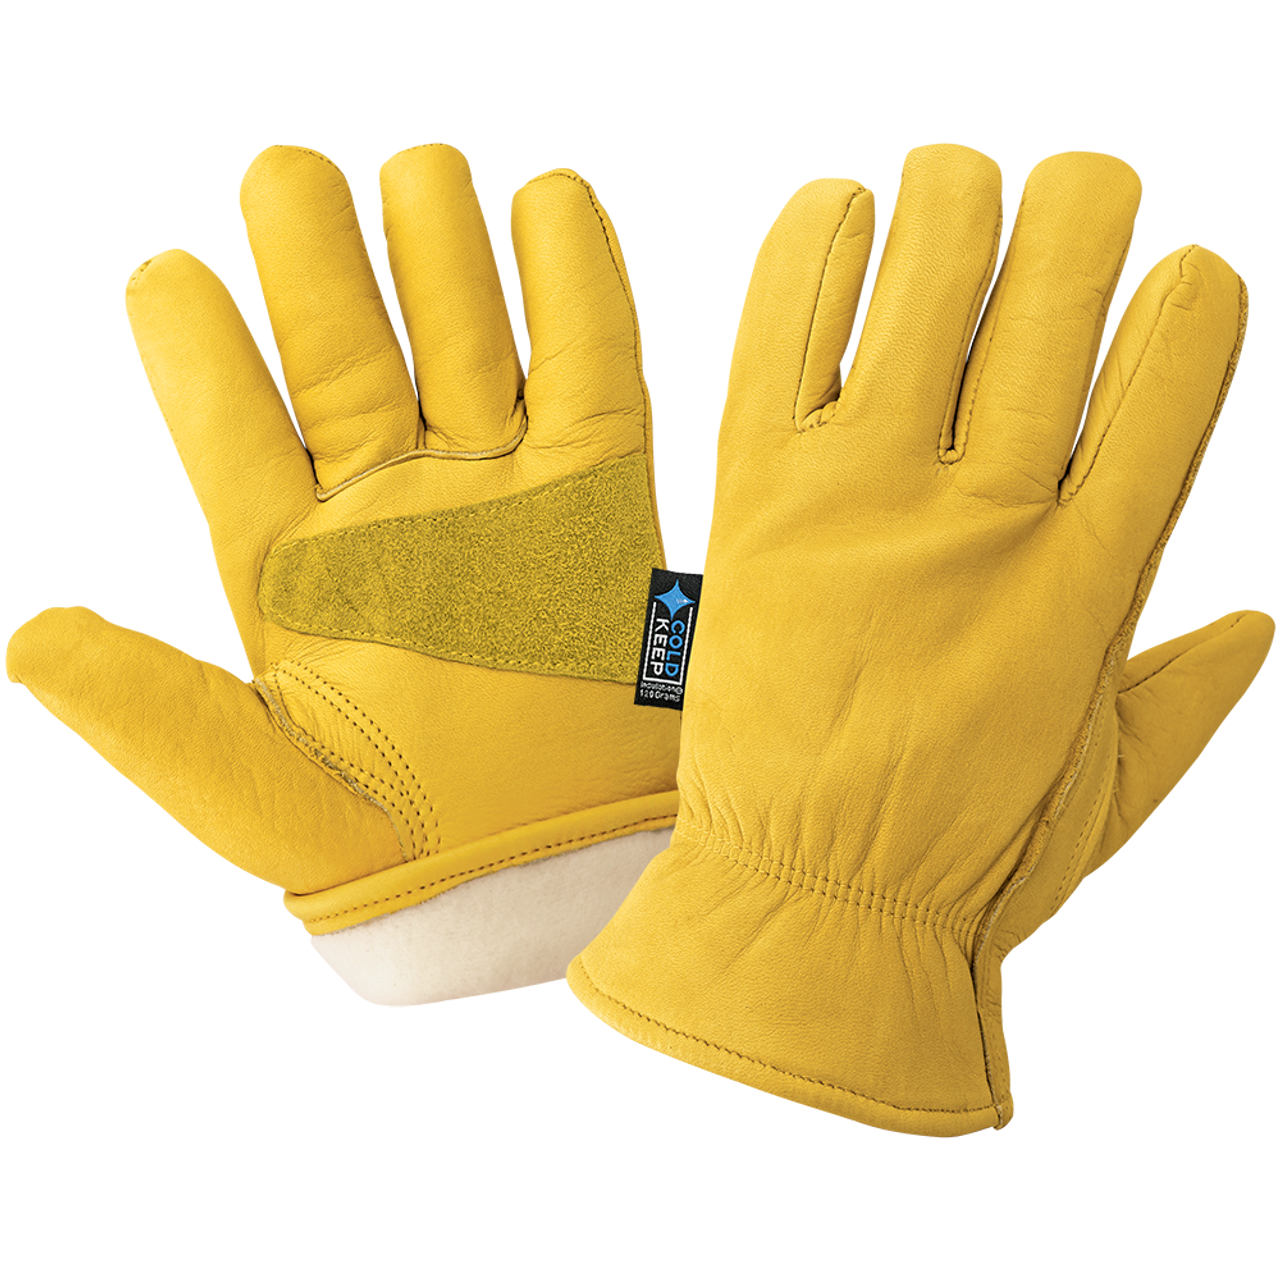 Buy Cowhide Leather Work Gloves Online